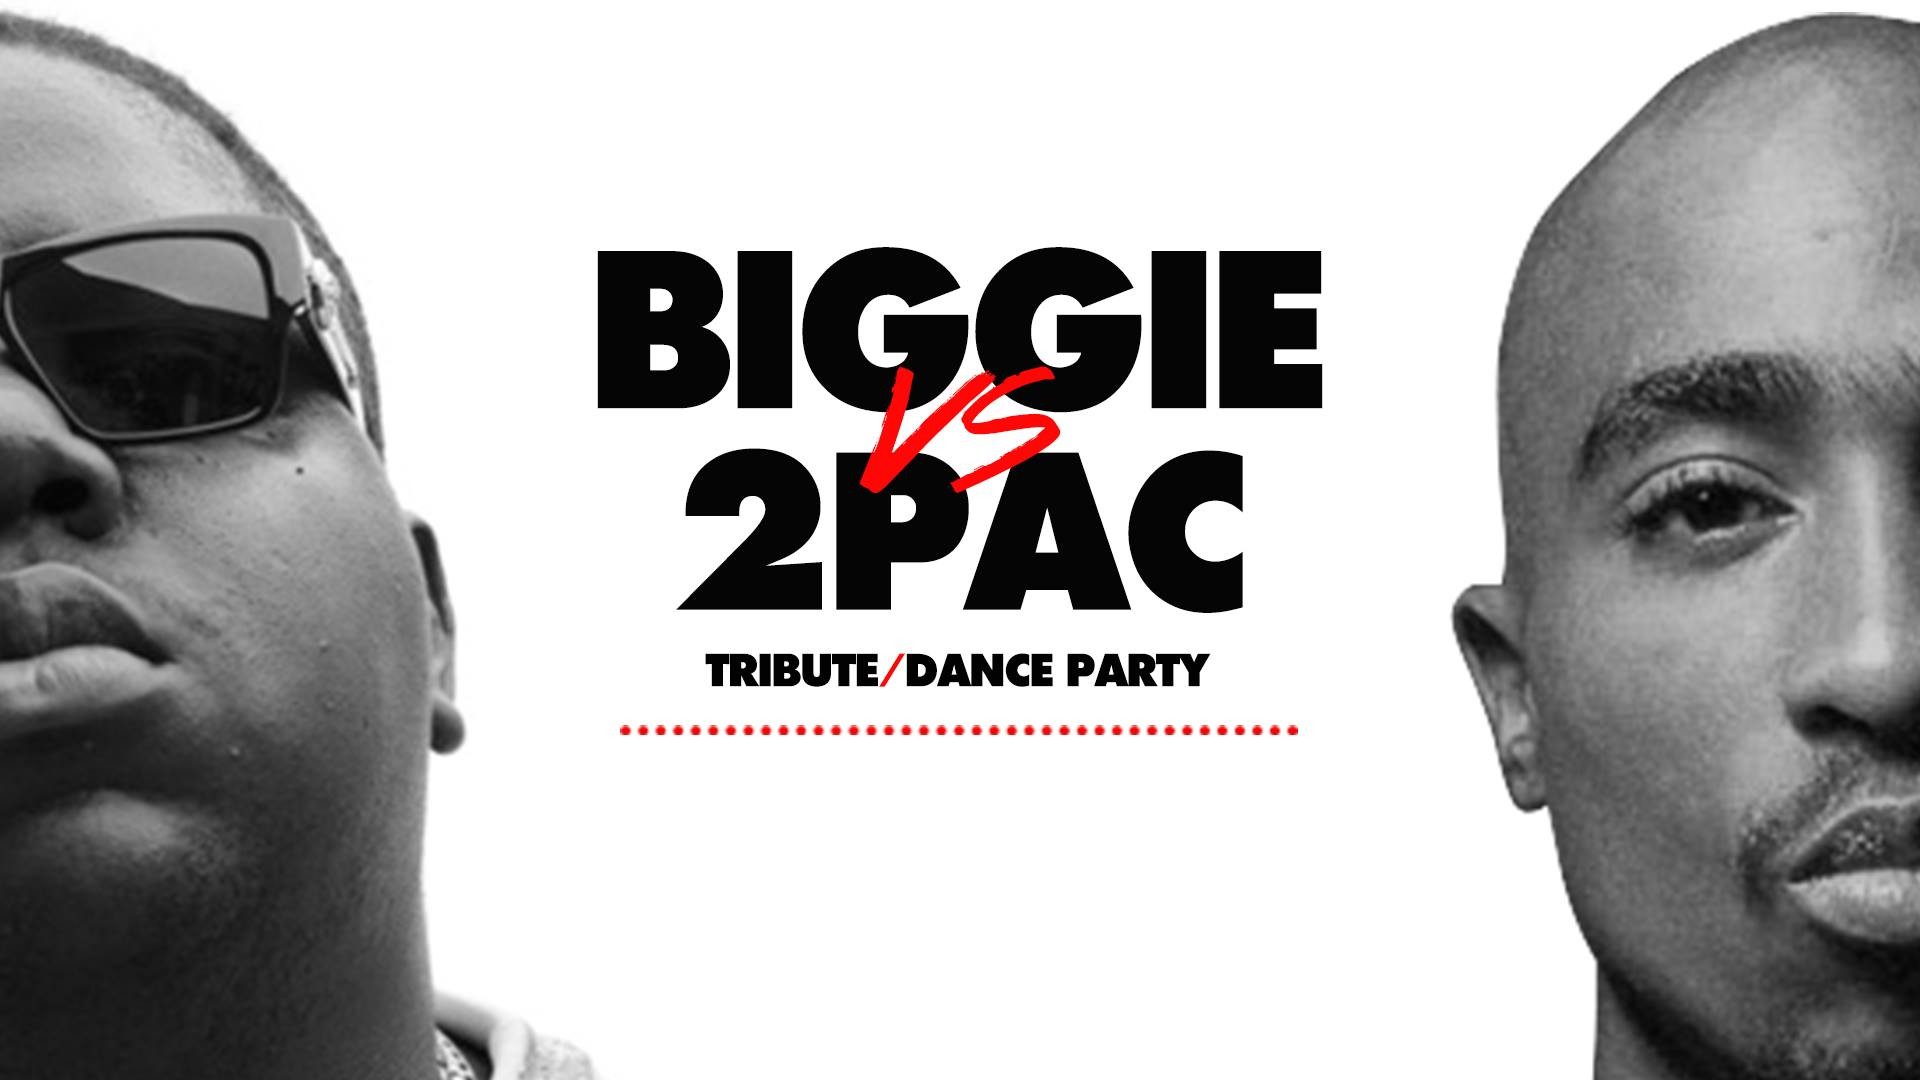 1920x1080 Biggie vs. Tupac (A Tribute / Dance Party)